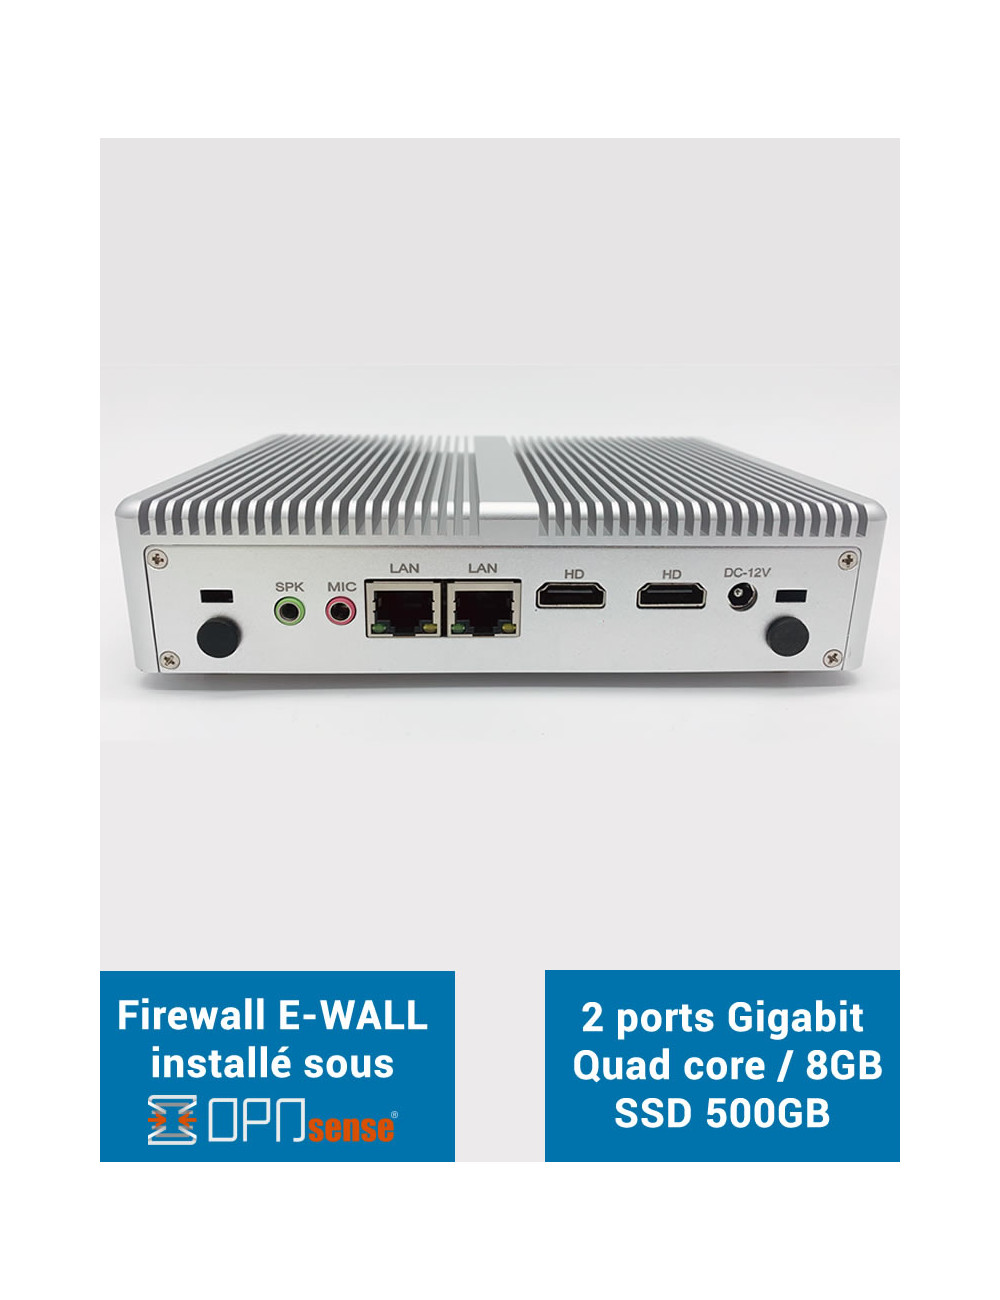 Firewall EG2x under OPNsense® 2 Gigabit ports 8GB SSD 500GB